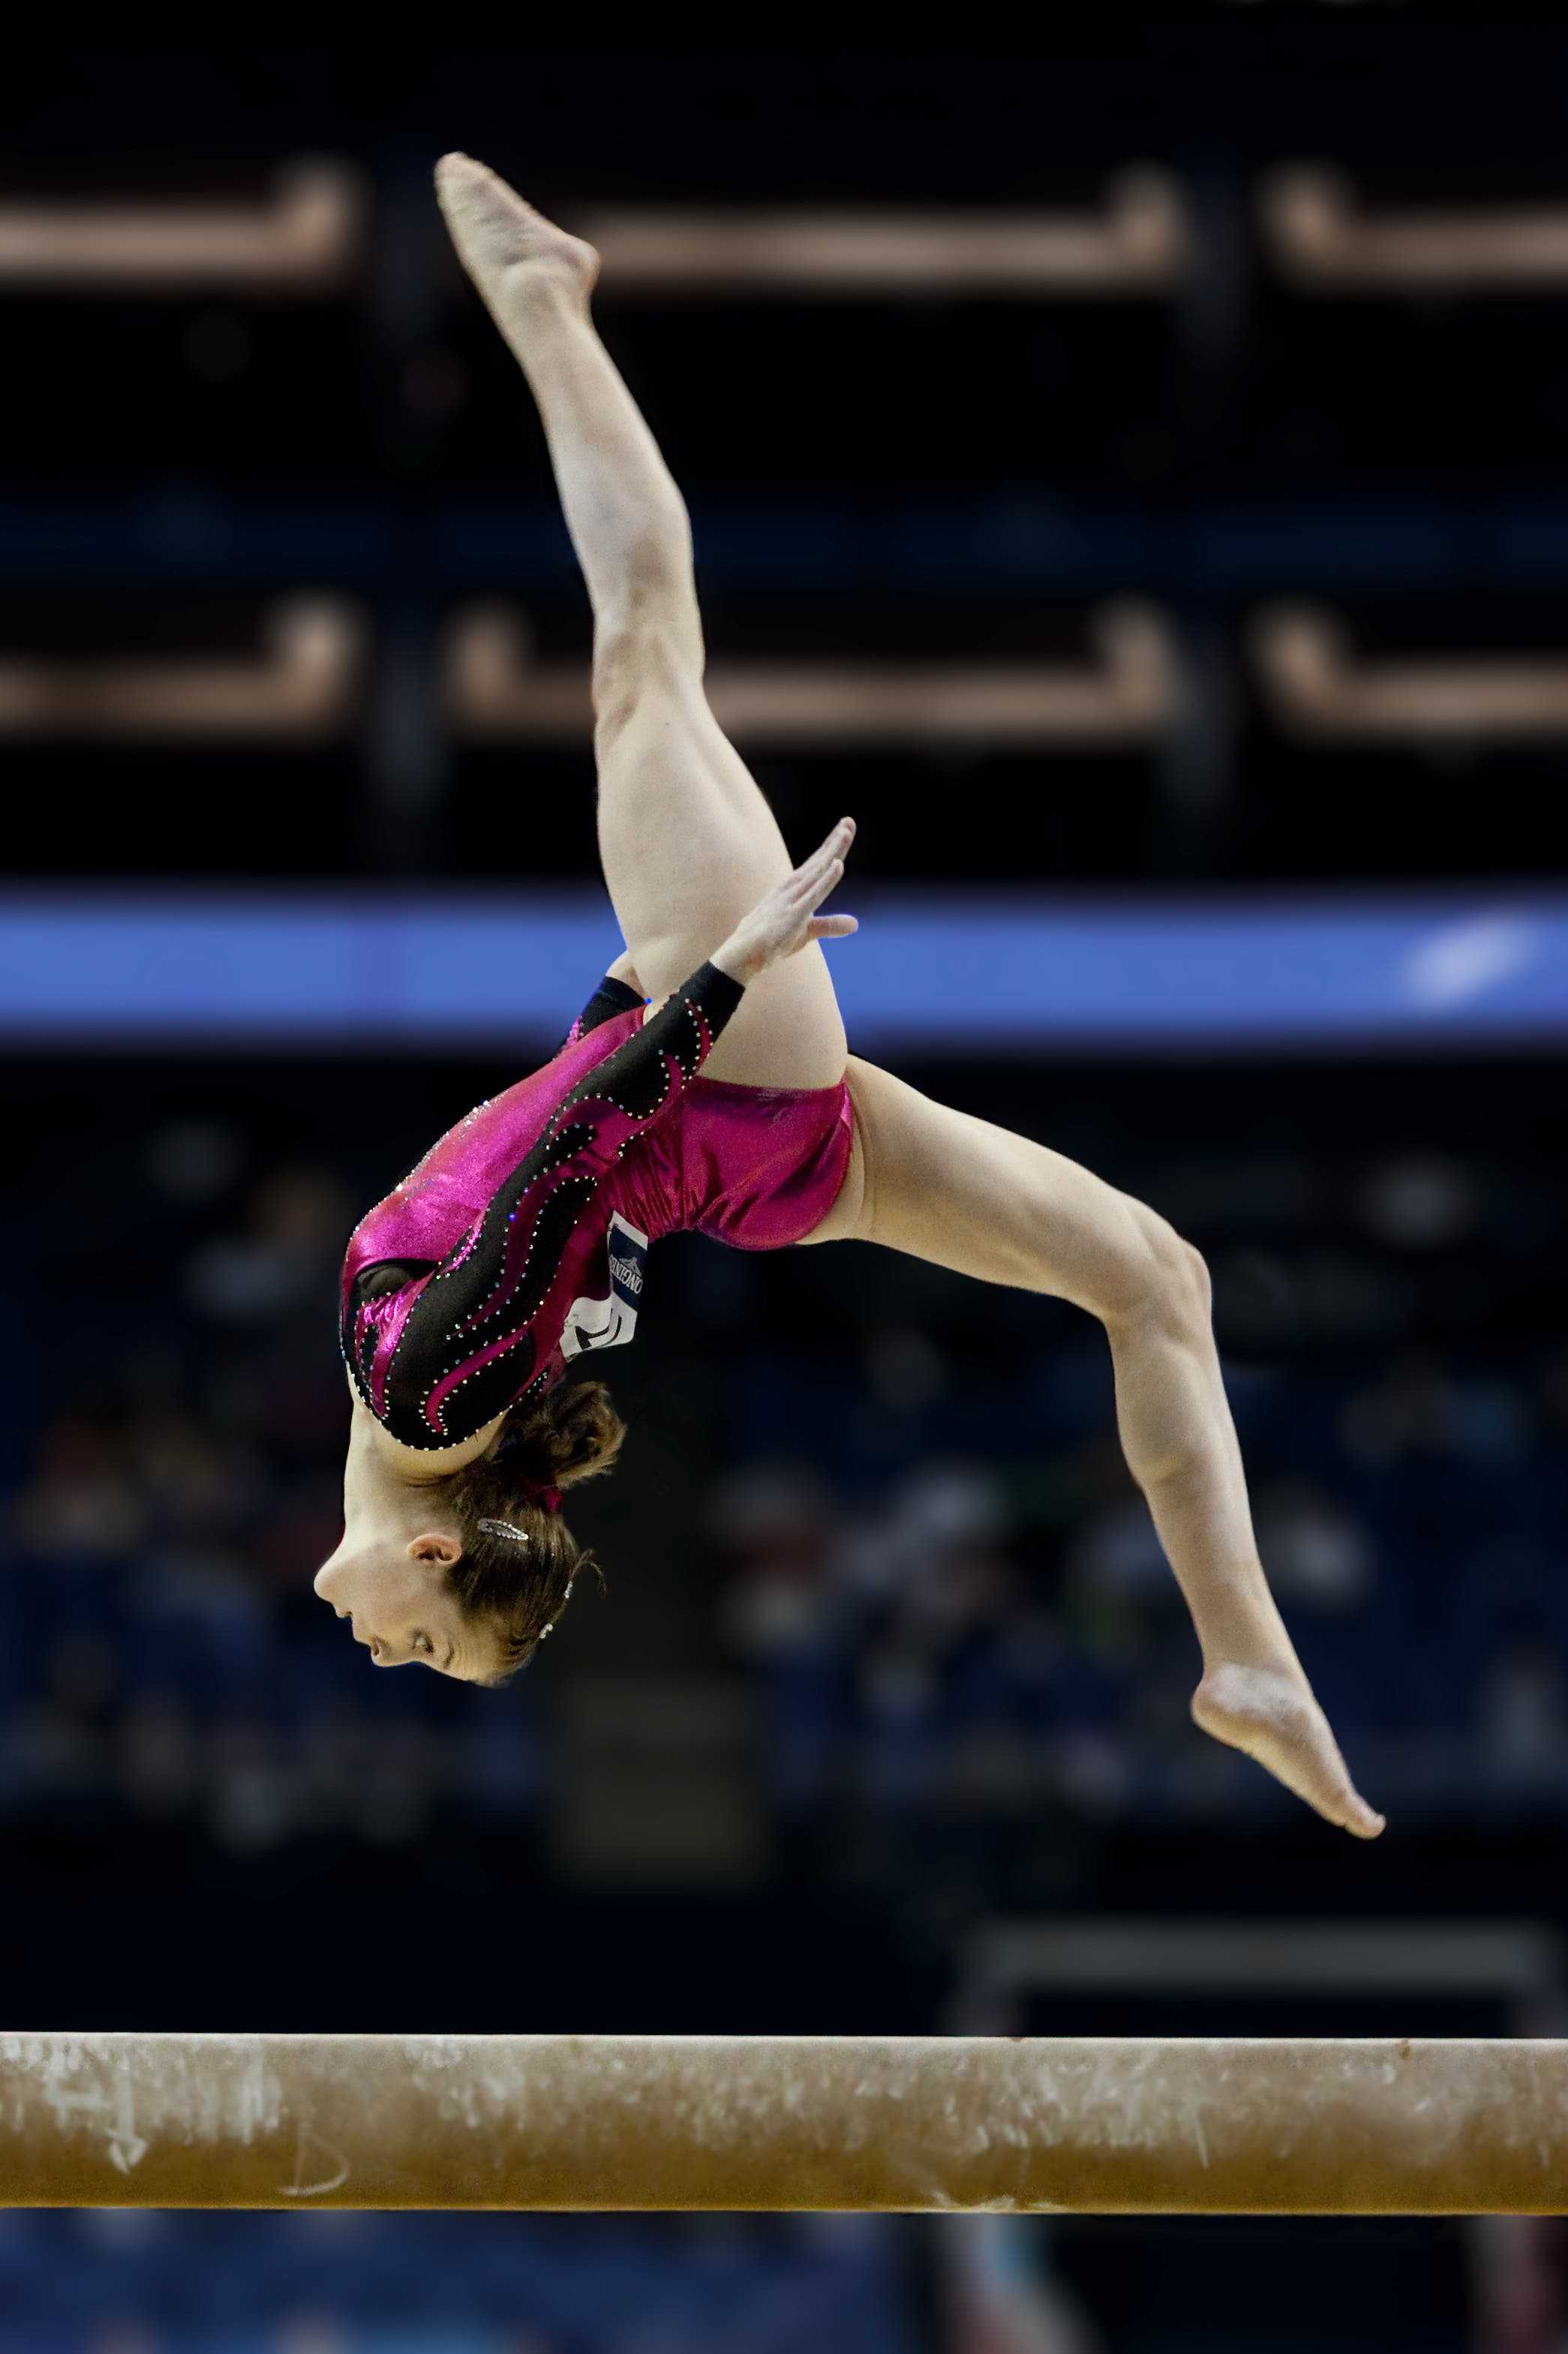 Australian artistic gymnast, Lauren Mitchell. Image credits: Steven Rasmussen.